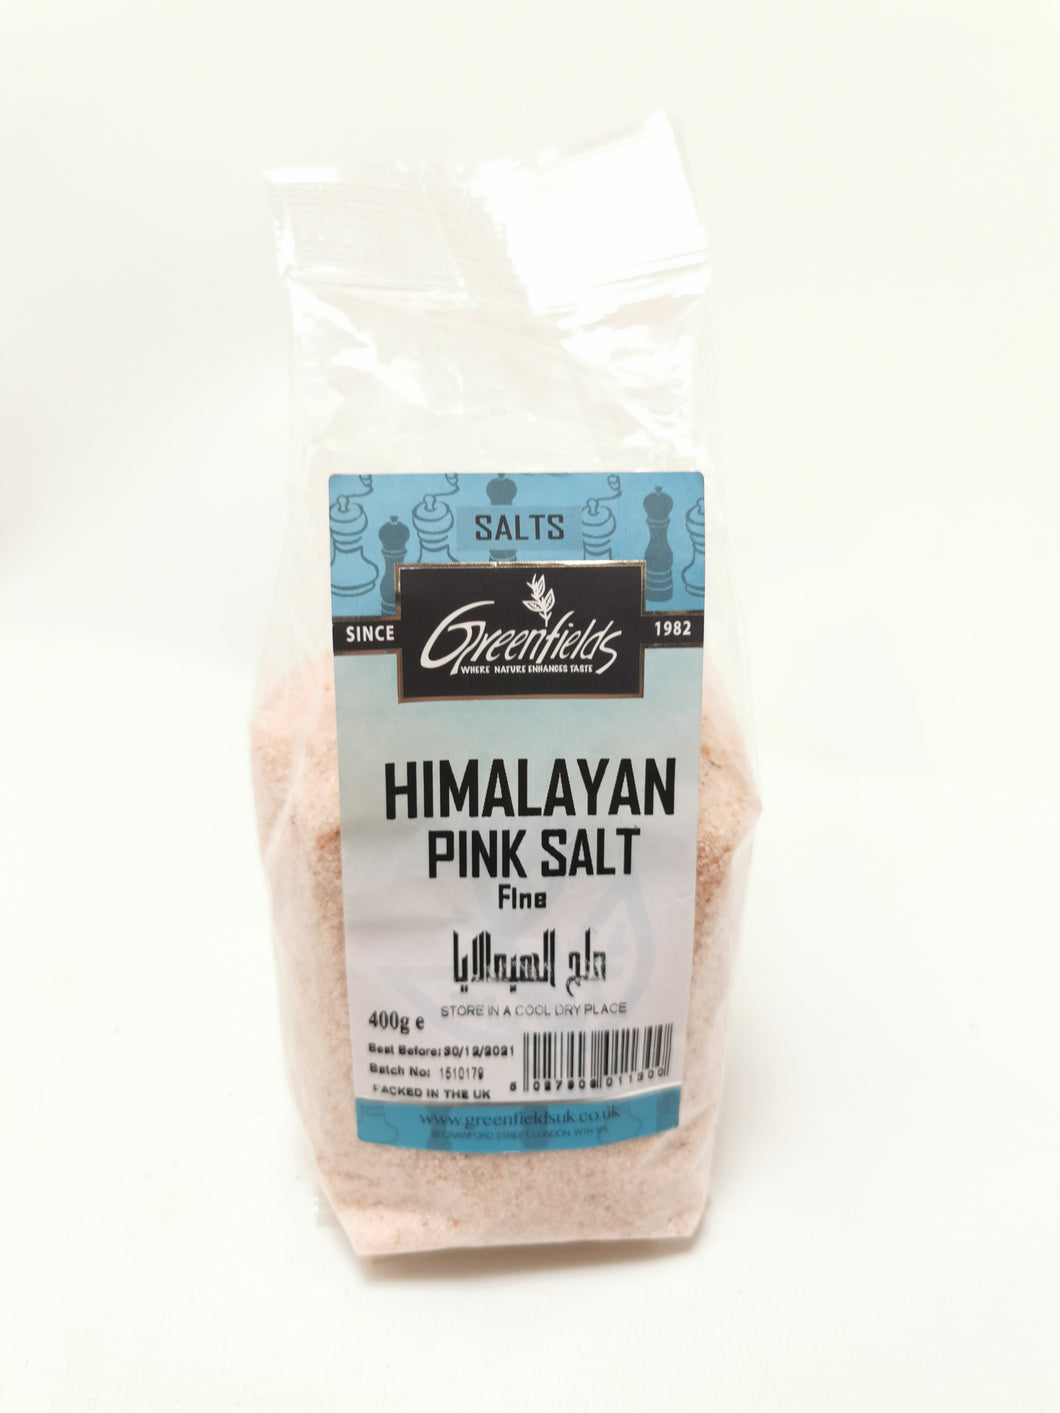 Greenfields Himalayan Pink Salt (Fine)